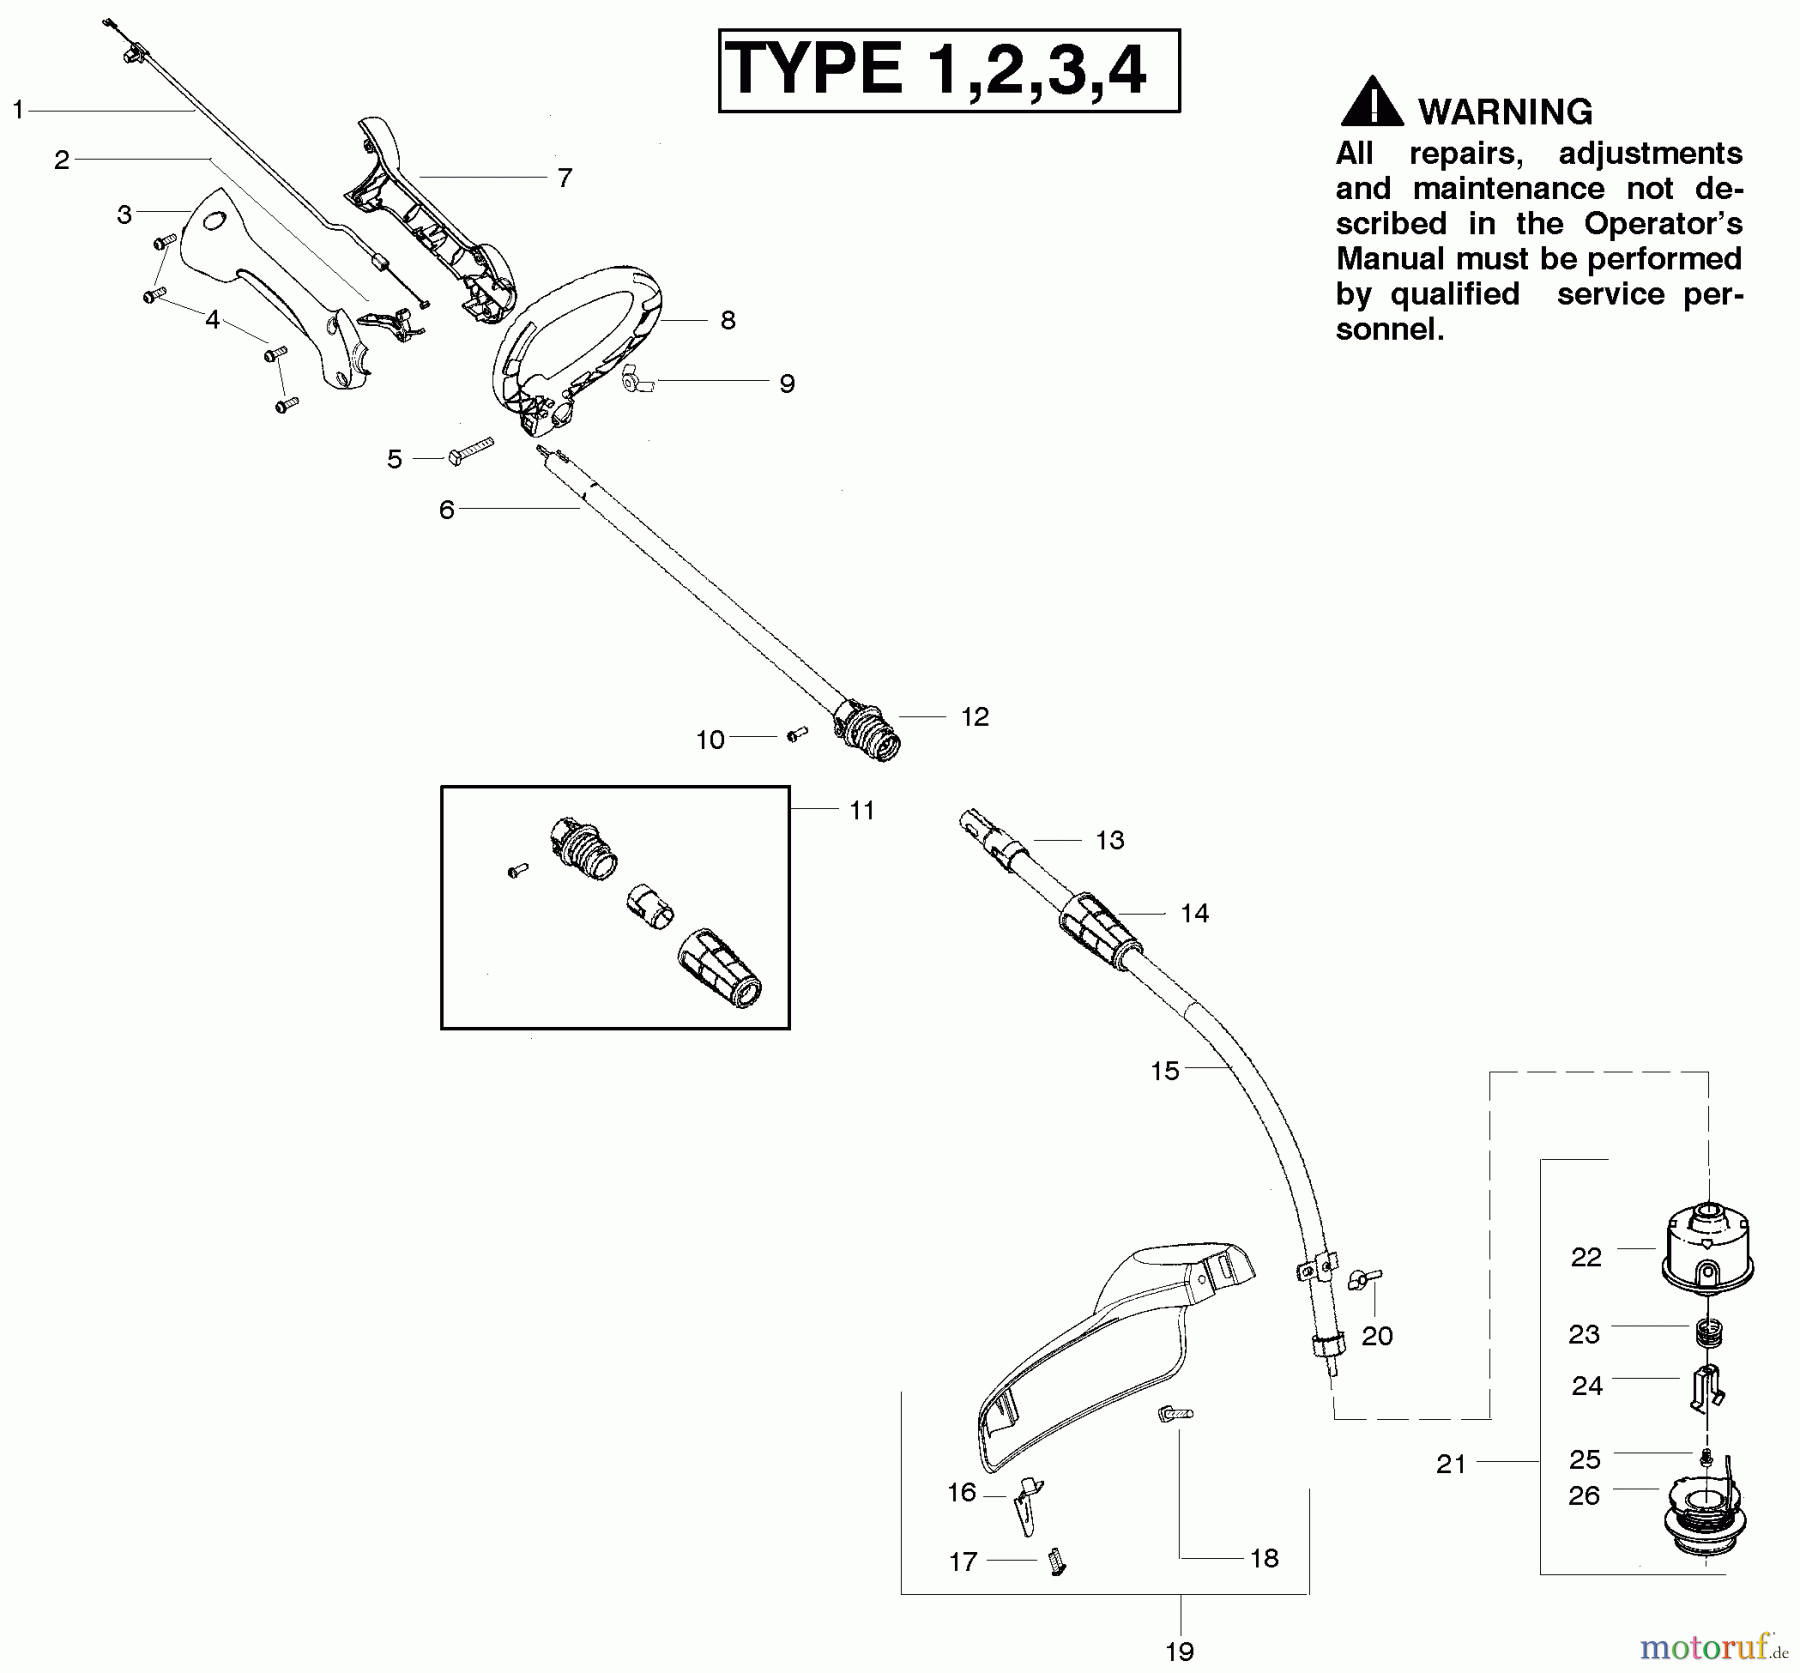  Poulan / Weed Eater Motorsensen, Trimmer FL20C (Type 3) - Weed Eater Featherlite String Trimmer Cutting Equipment Type 1,2,3,4